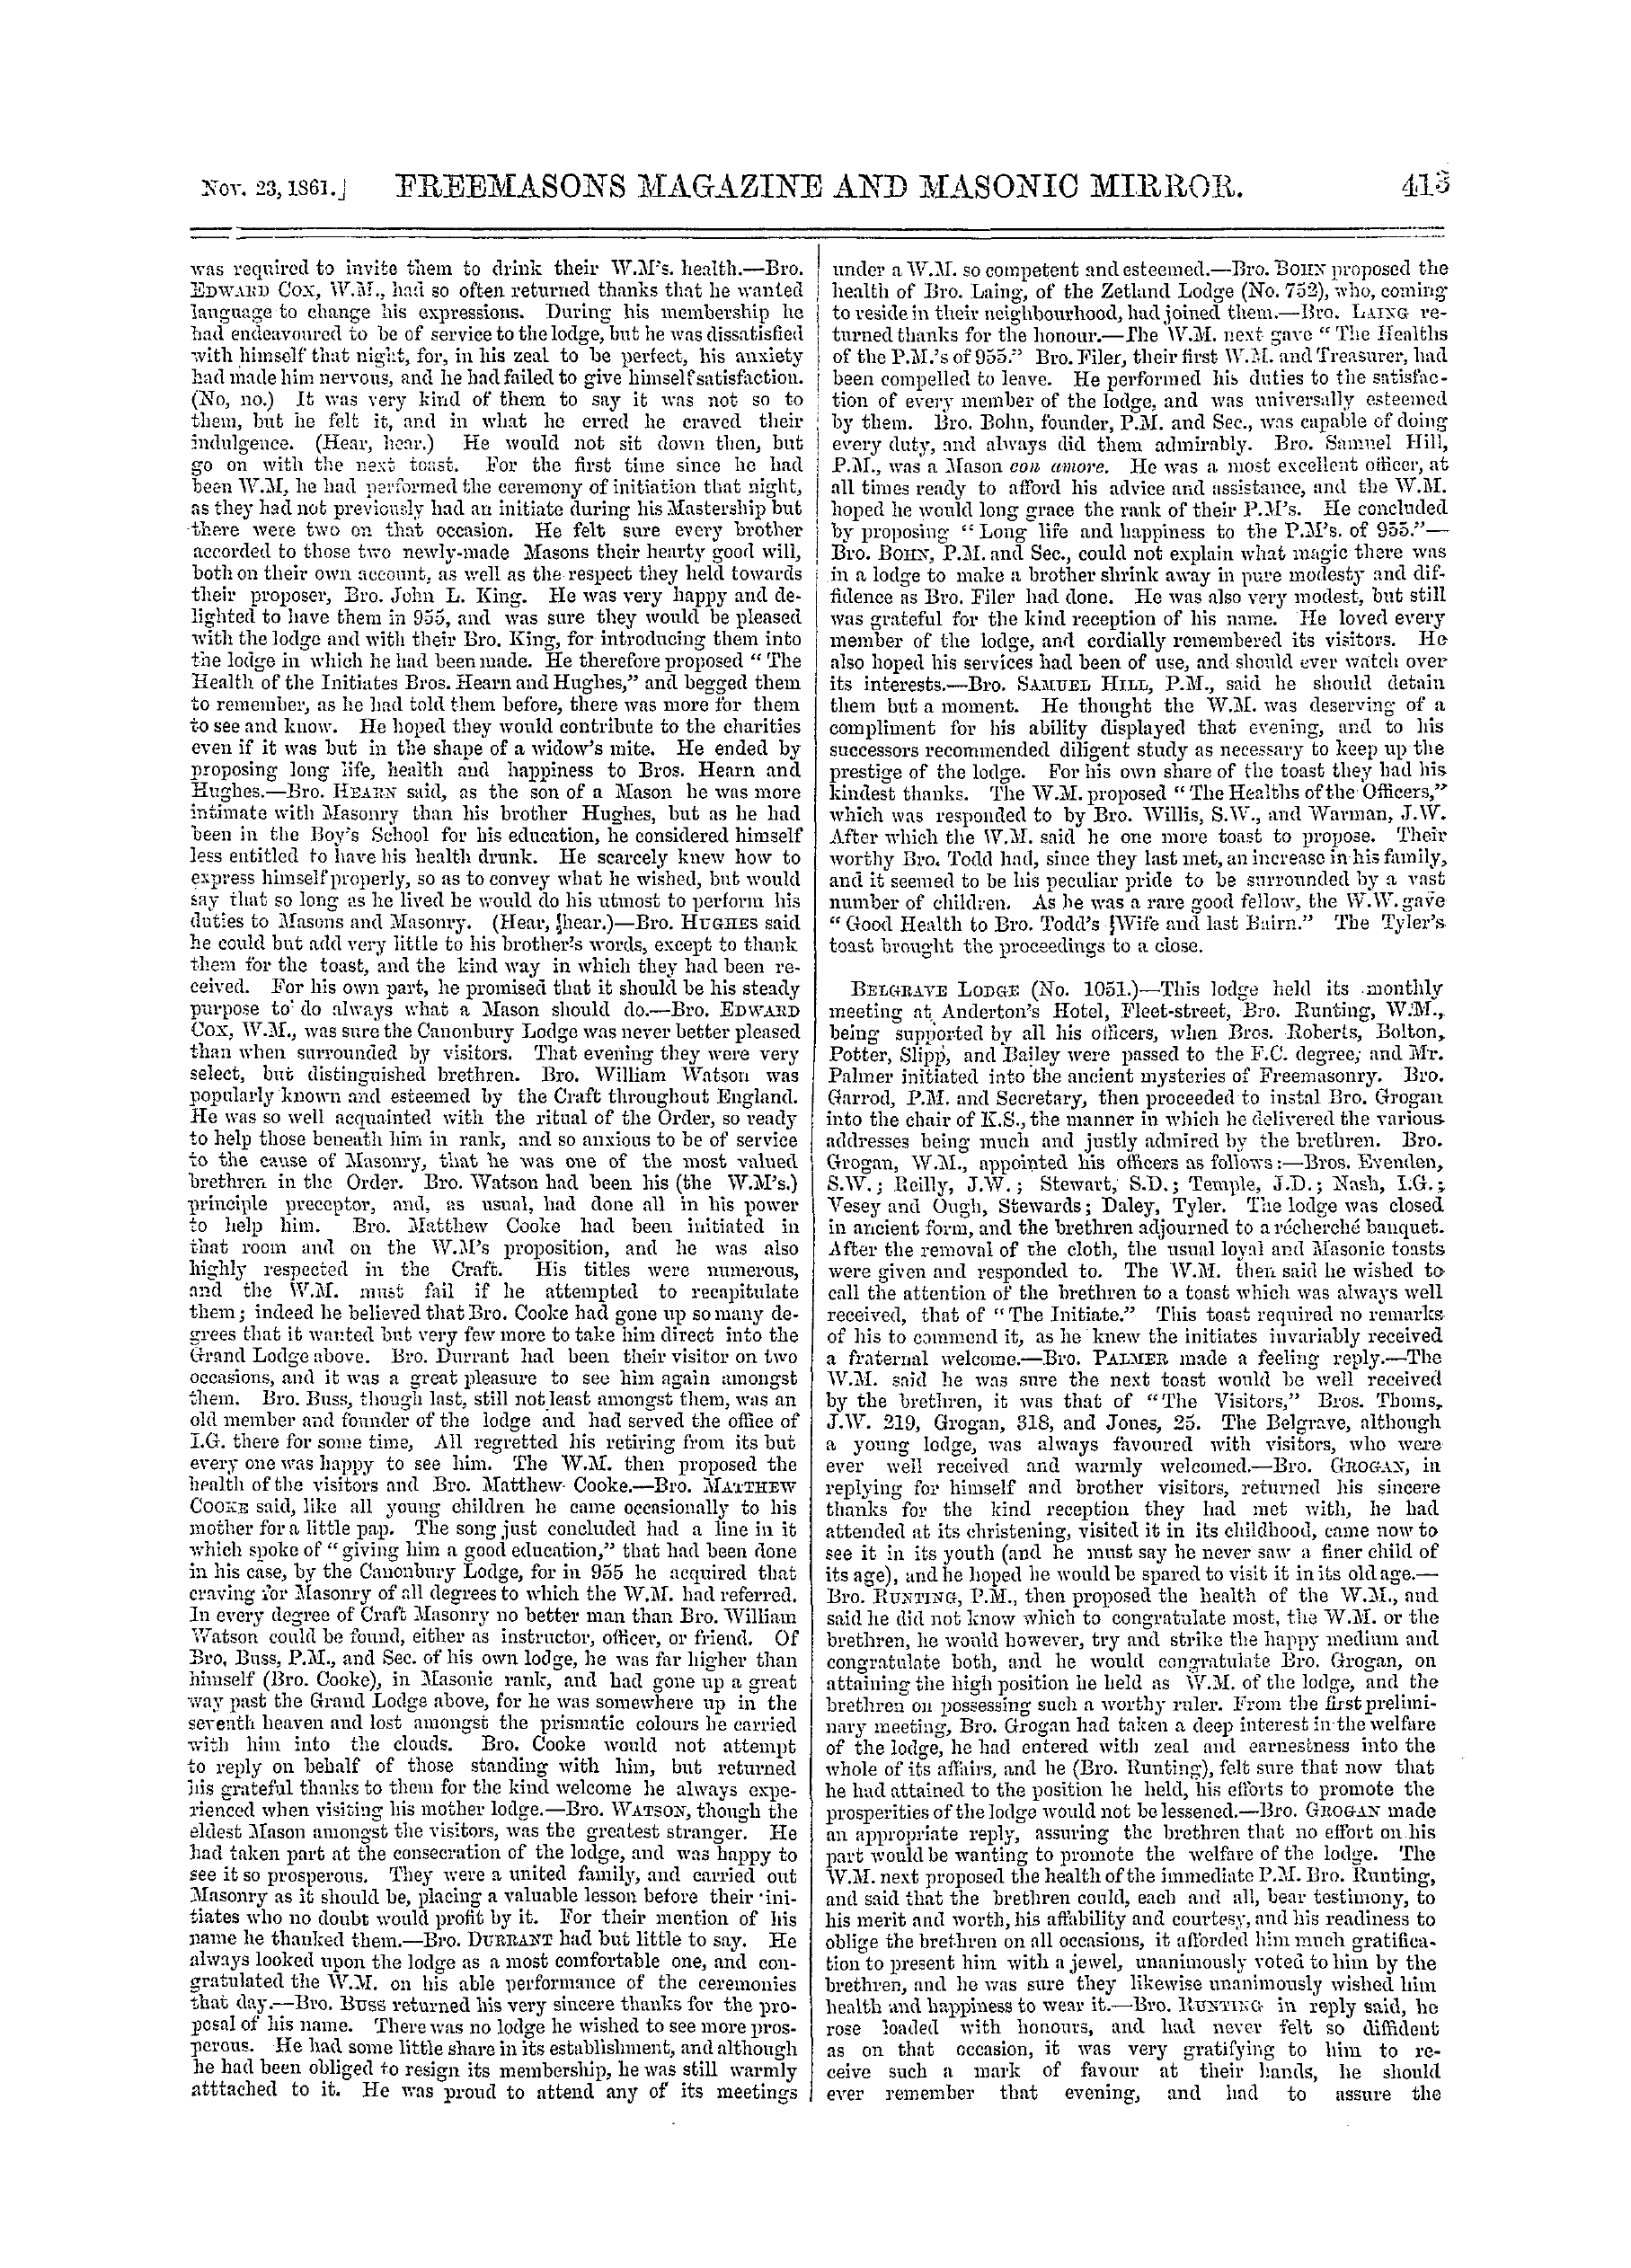 The Freemasons' Monthly Magazine: 1861-11-23 - Metropolitan.